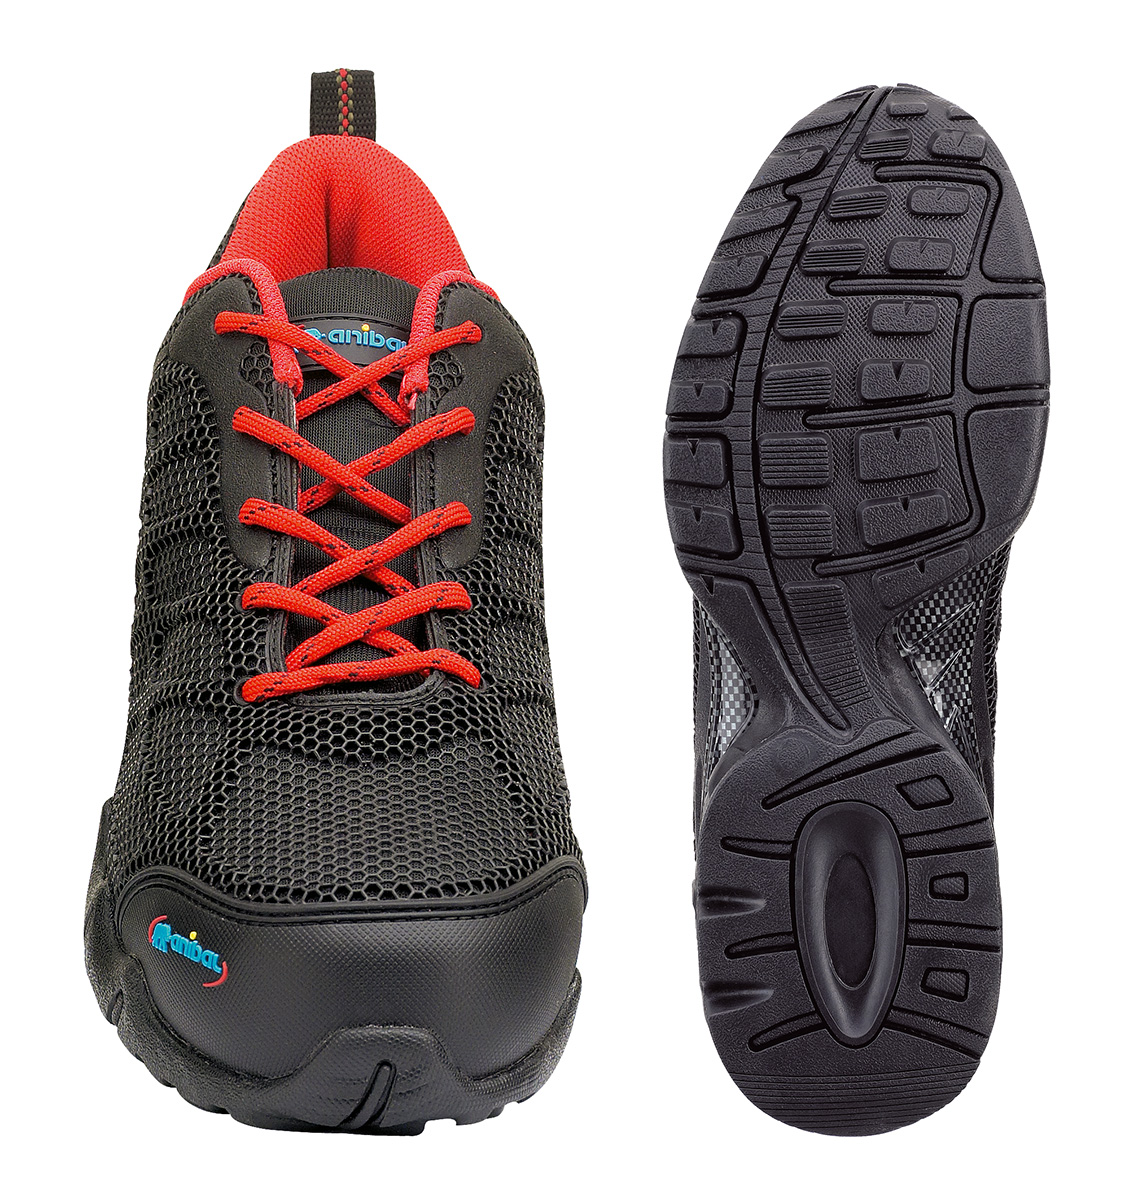 1688-ZDTN PRO Calzado de Seguridad Sporty Zapato mod. 